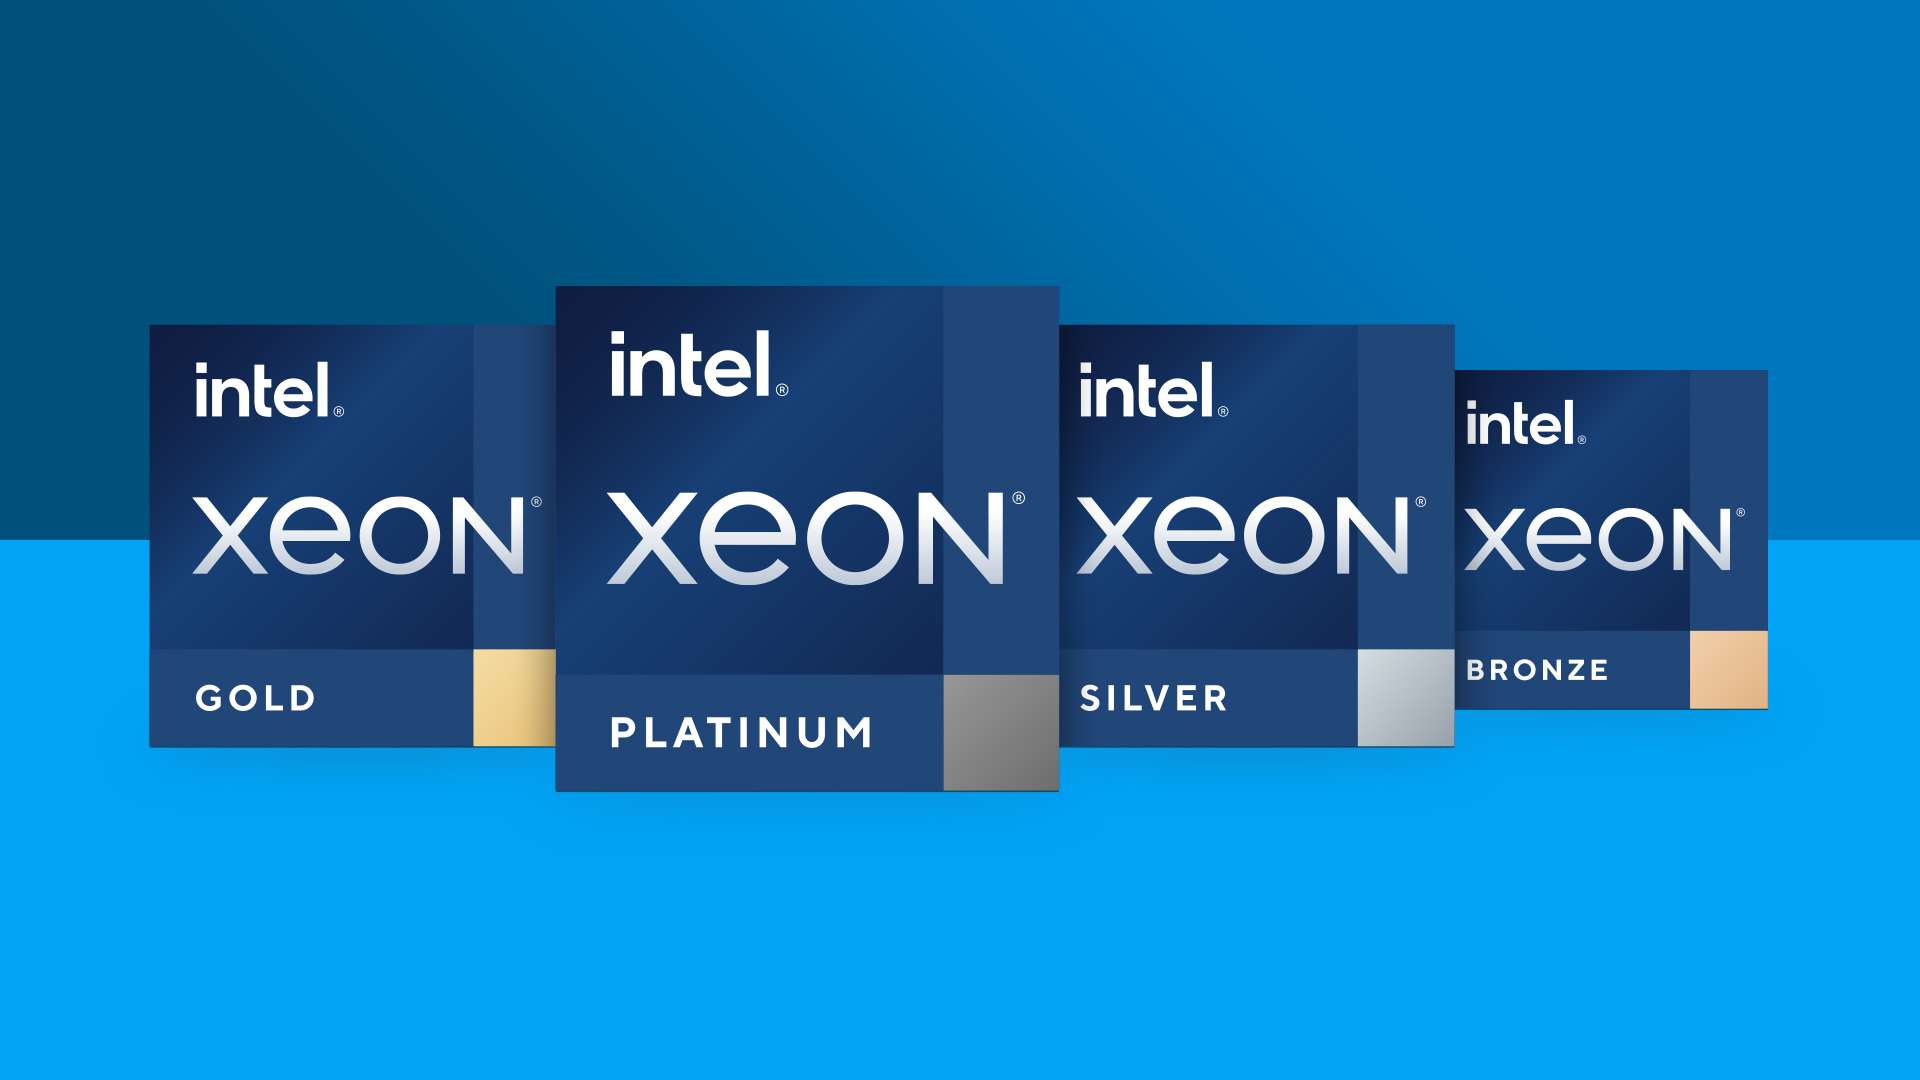 4th Gen Intel Xeon Processor Family, sapphire rapids